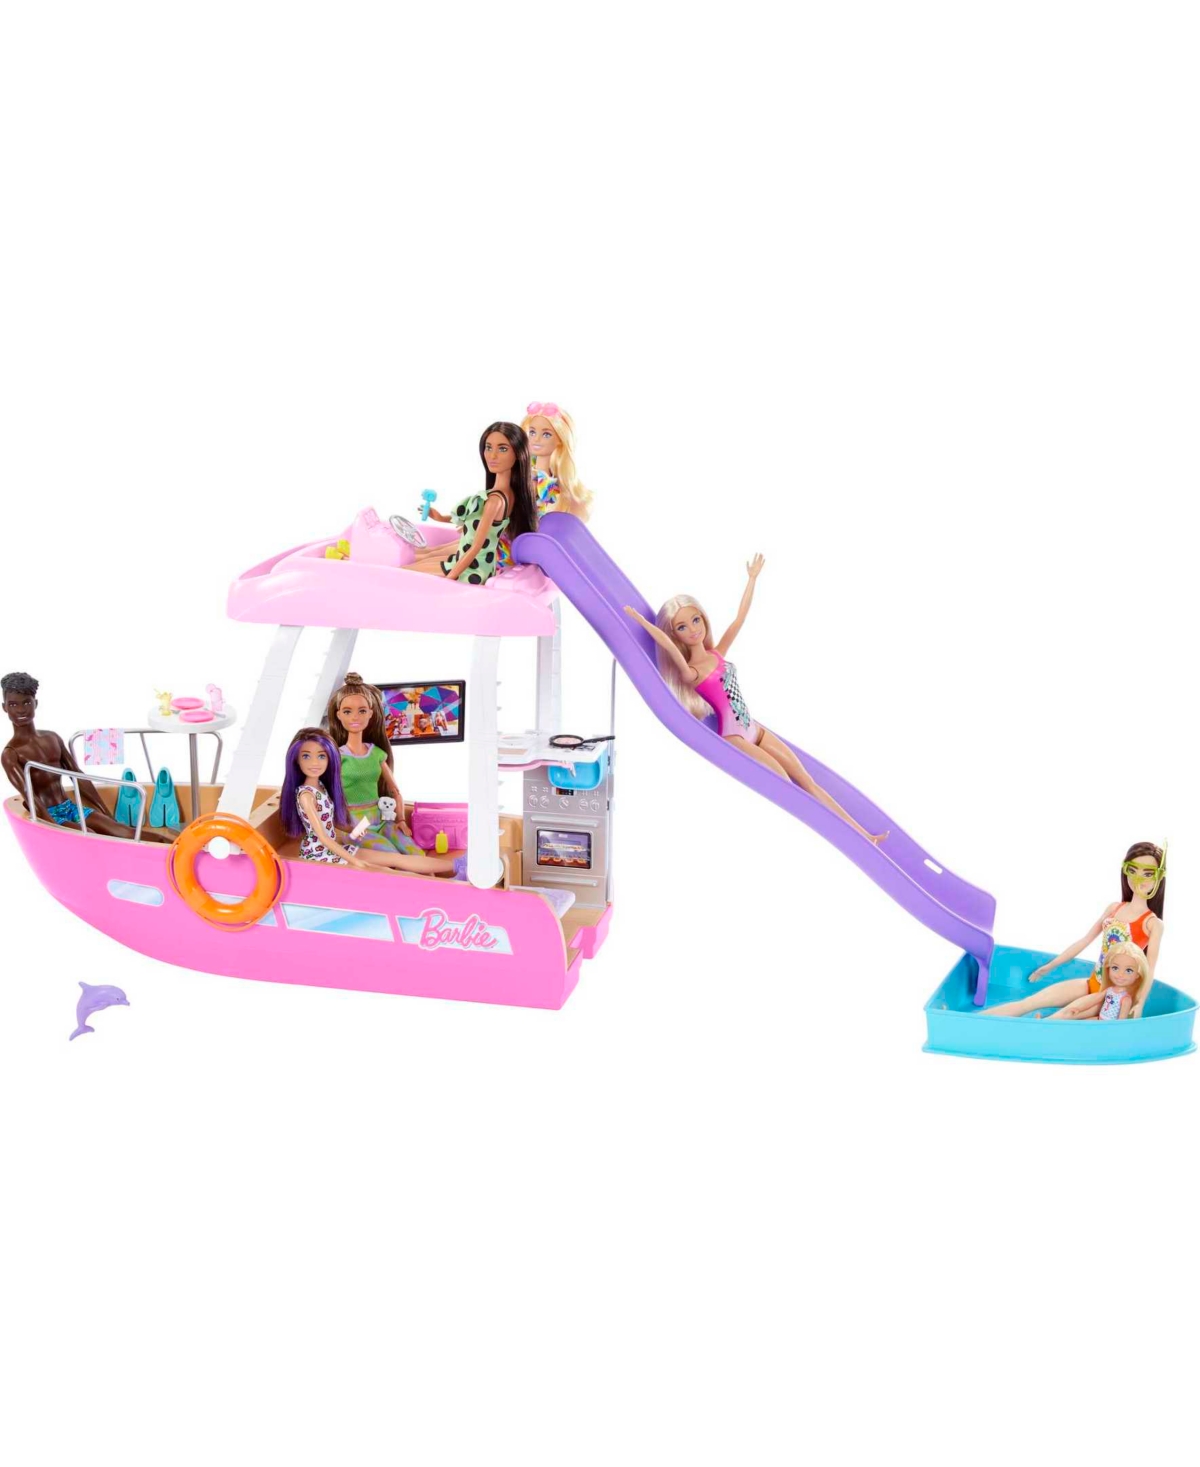 Barbie Kids' Dream Boat Playset In Multi-color